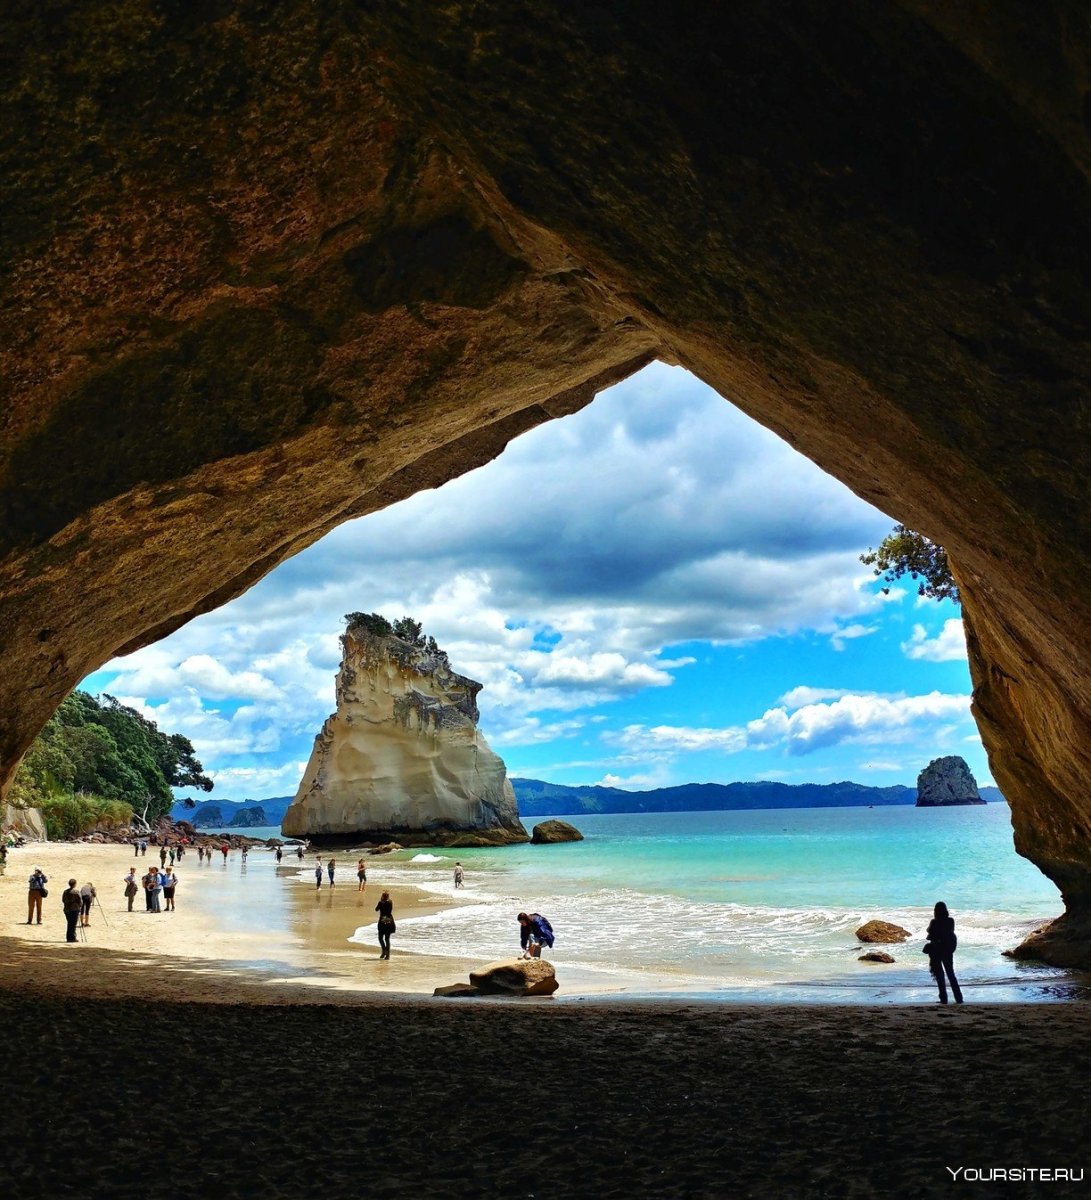 Кафедральная пещера, новая Зеландия (Cathedral Cove)